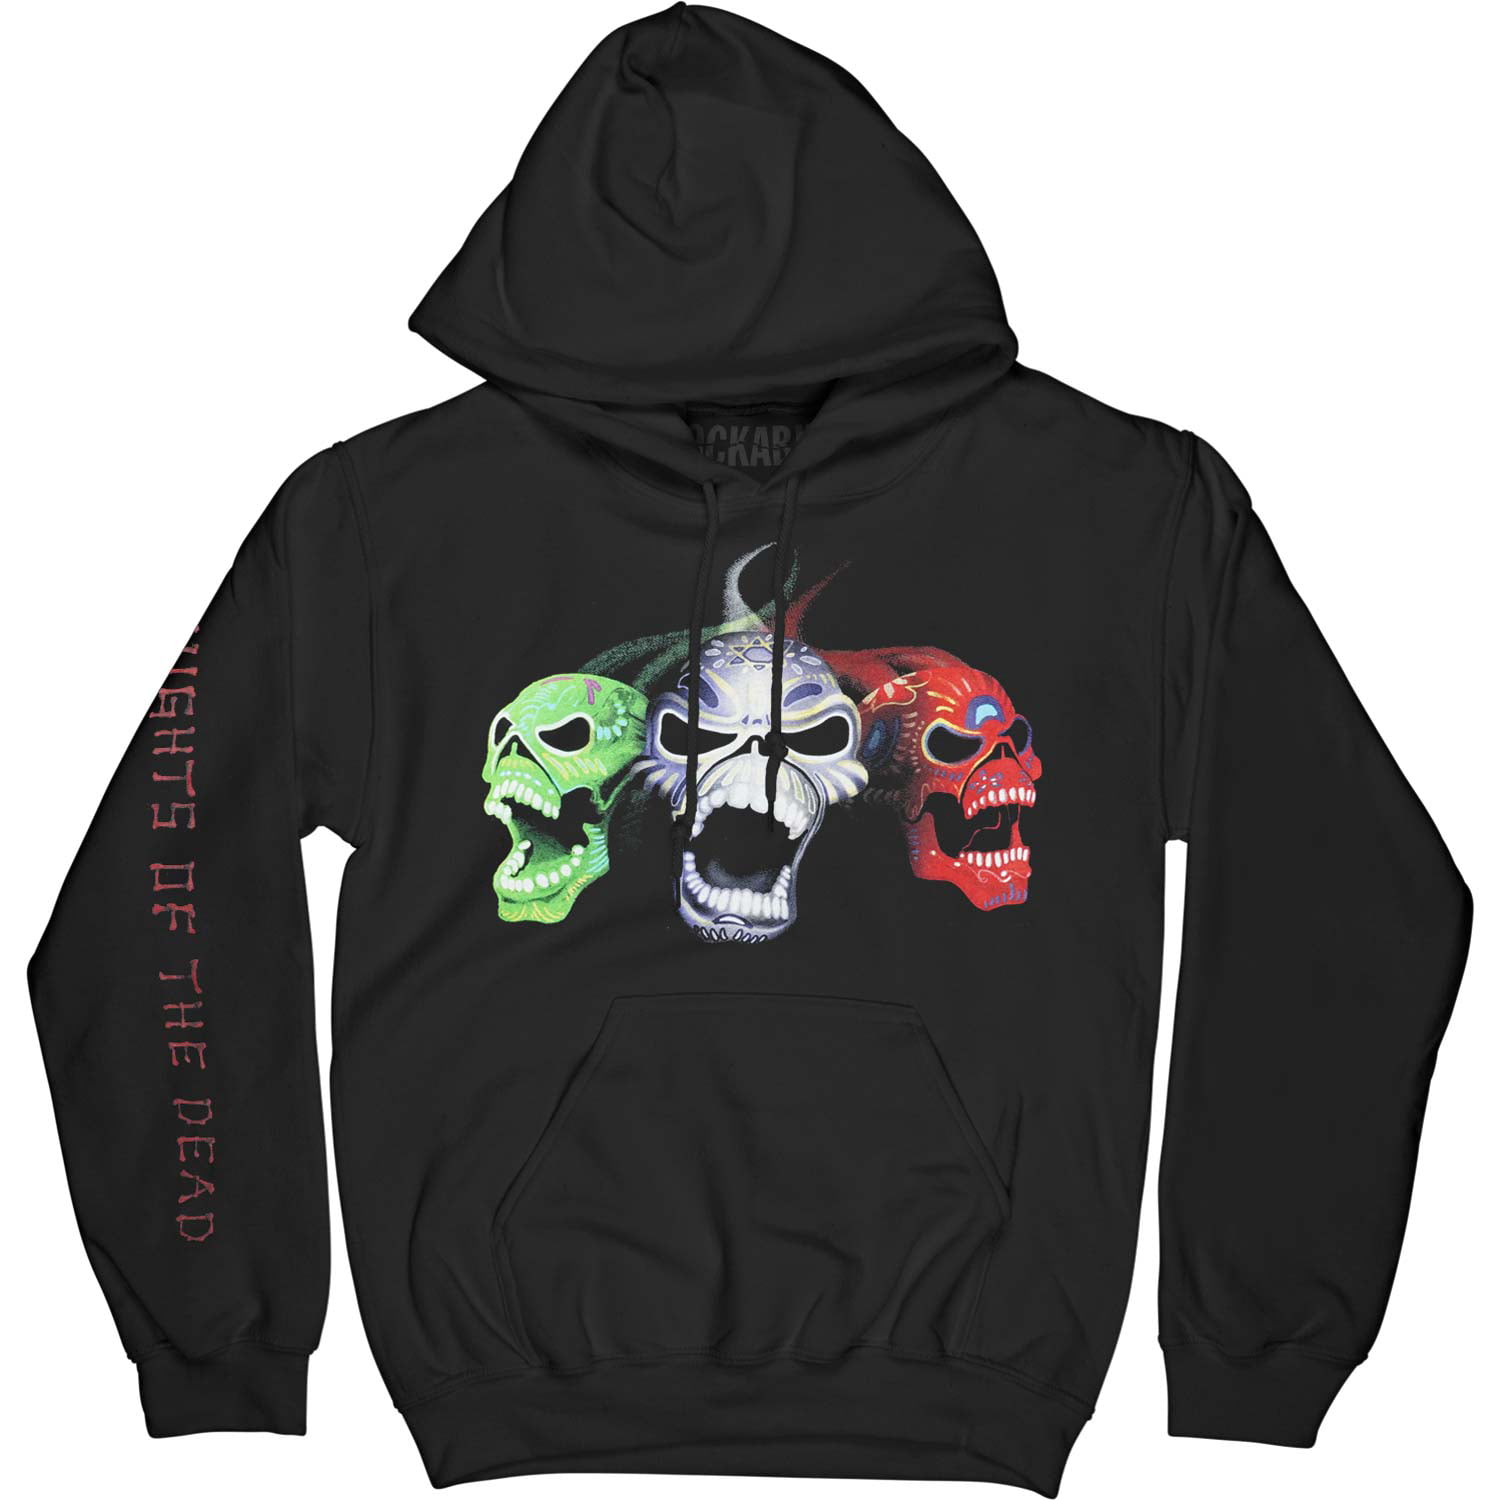 Zippered Hooded Sweatshirt Black Back Print Marilyn Manson Men's  Cross Logo